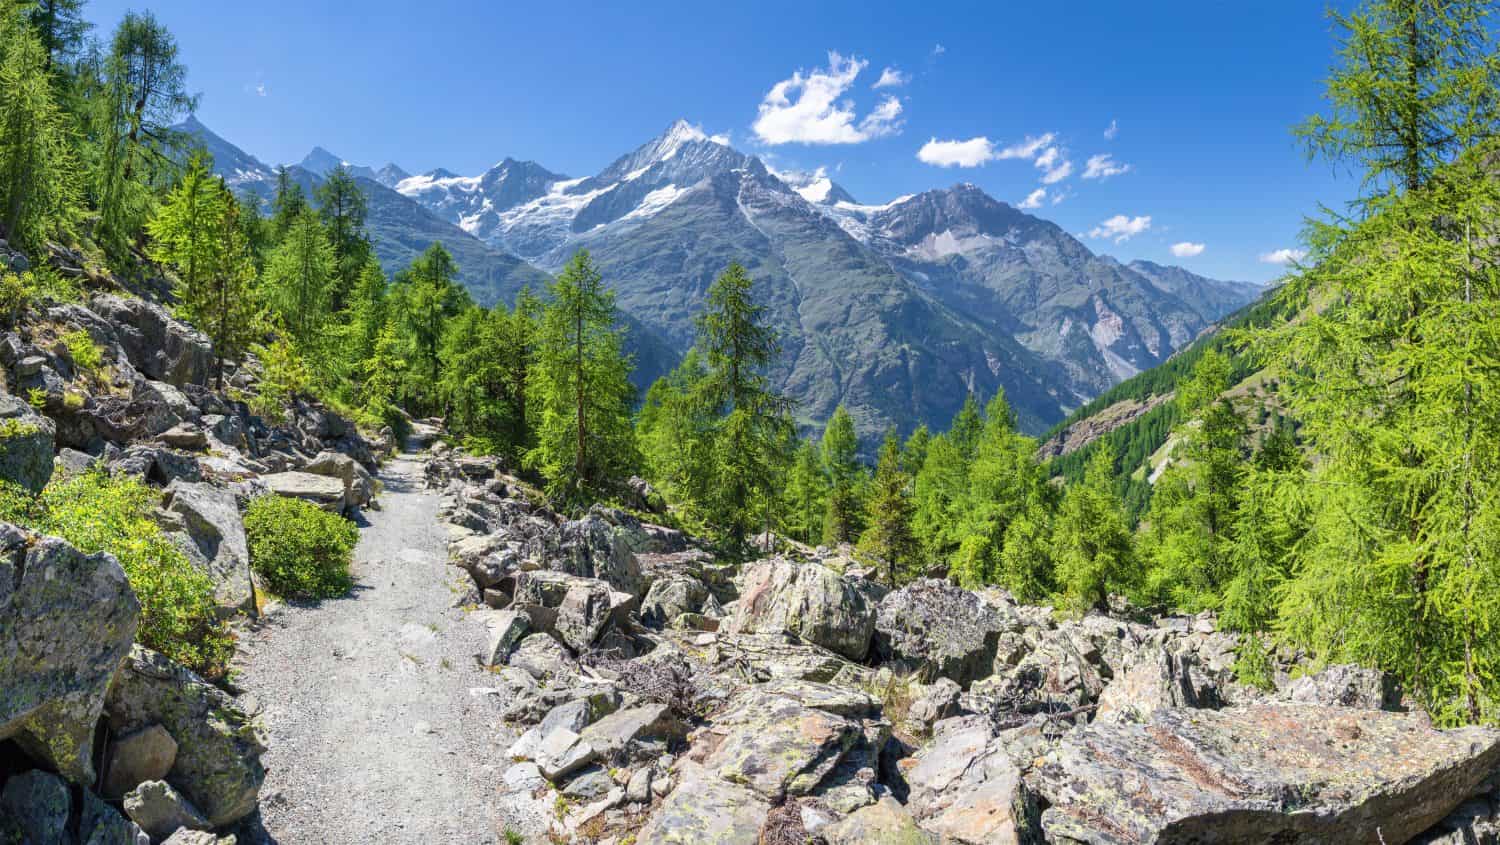 The Walliser alps peaks - Bishorn, Weisshorn, Schalihorn, and Rothorn over the Mattertal valley